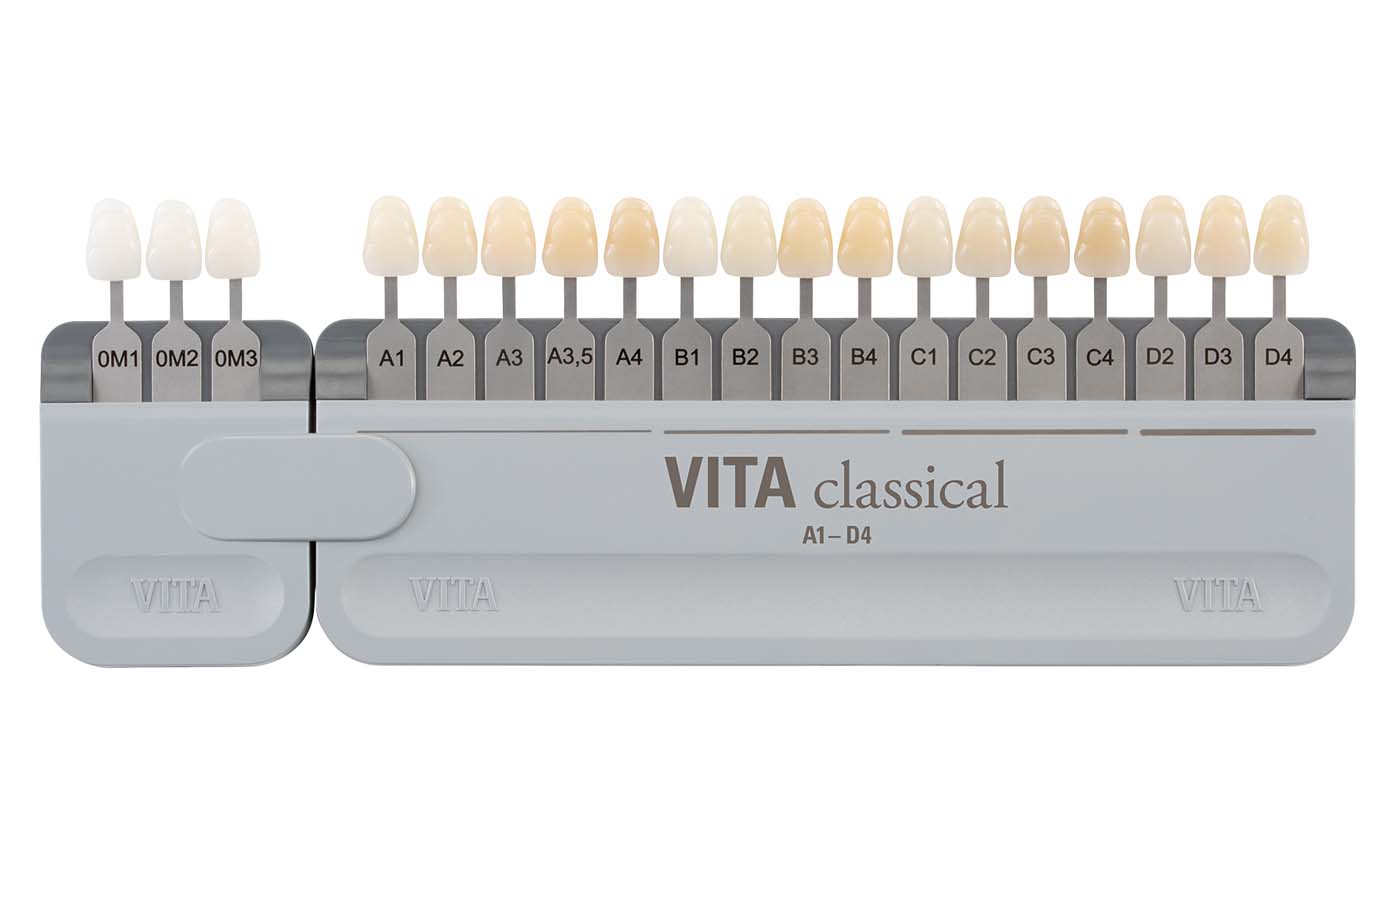 VITA classical A1-D4® Farbskala mit VITA Bleached Shades VITA